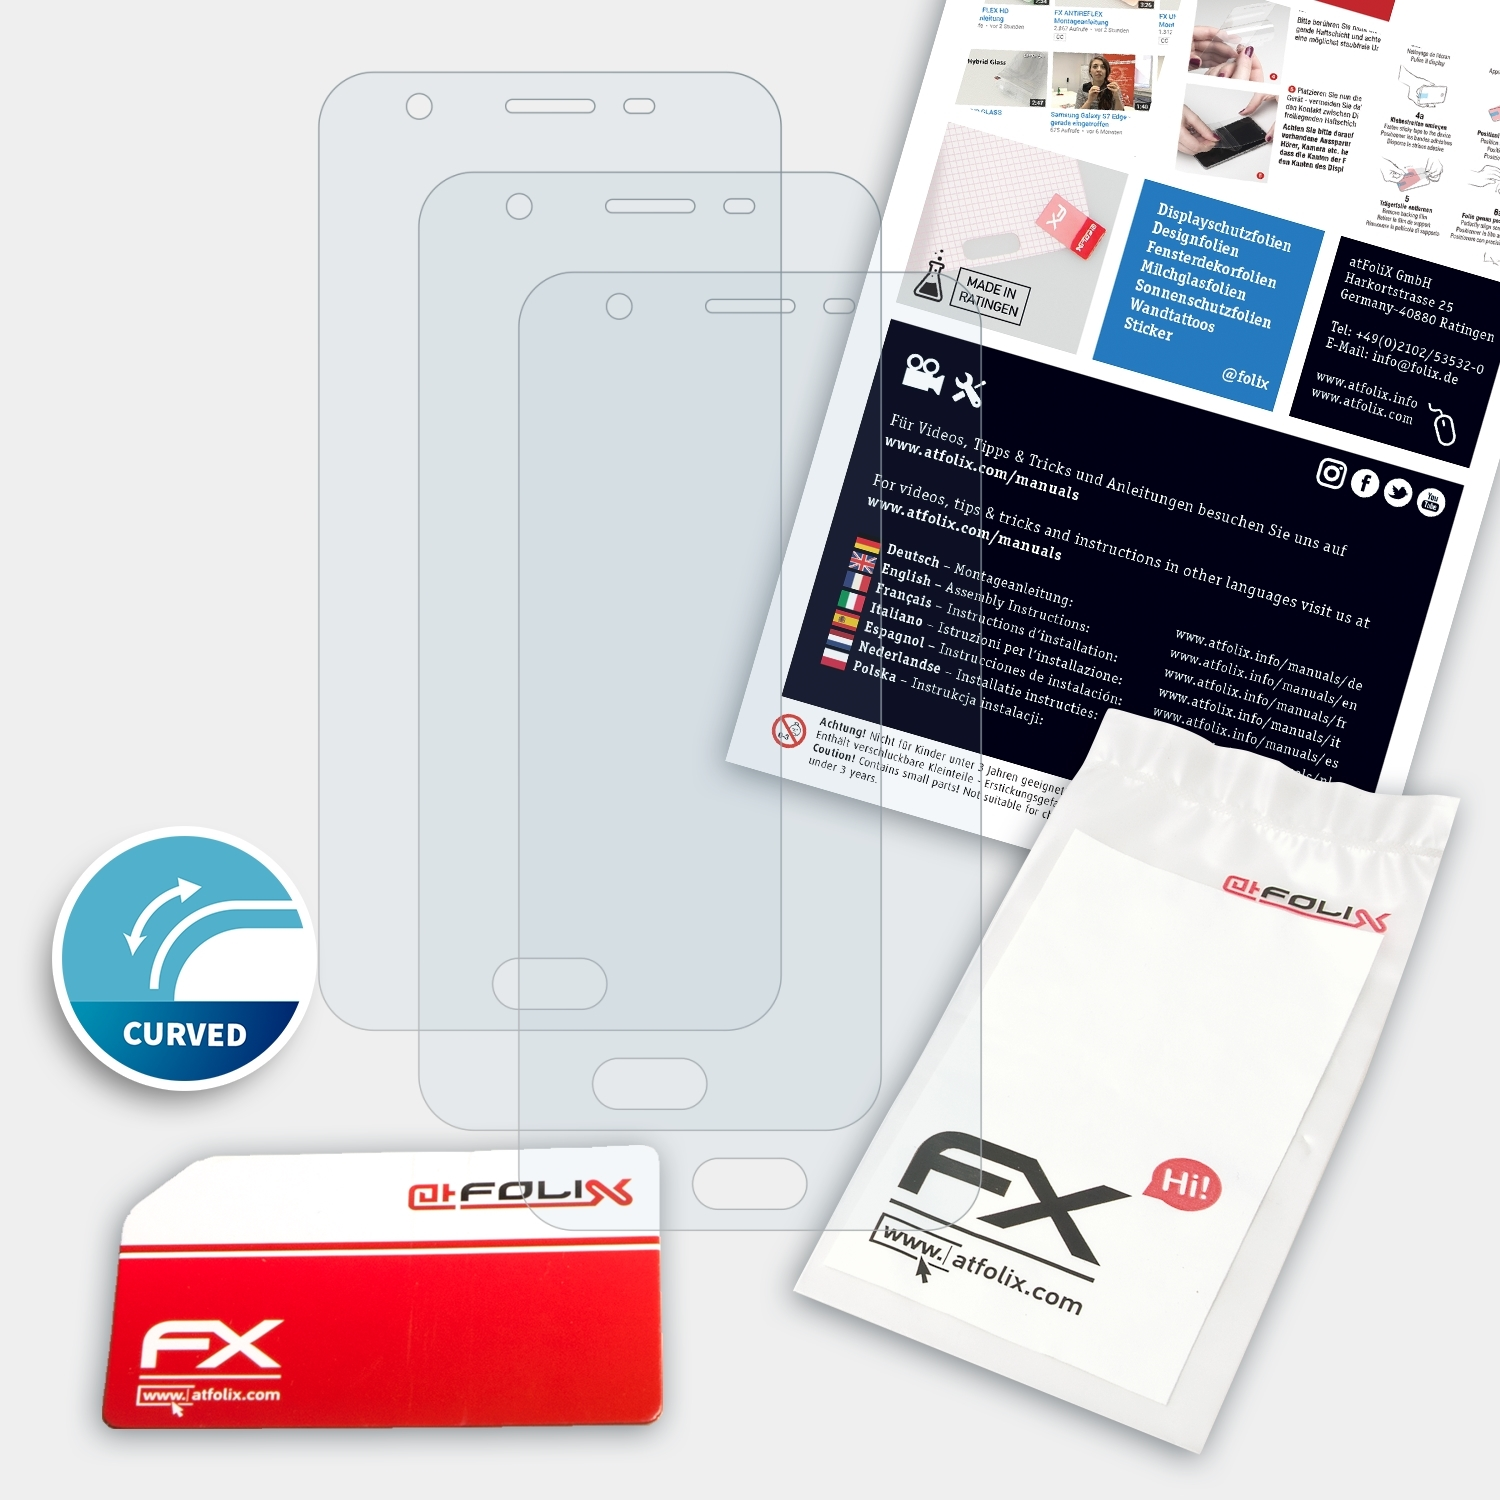 Galaxy FX-ActiFleX J3 3x Samsung Displayschutz(für Star) ATFOLIX